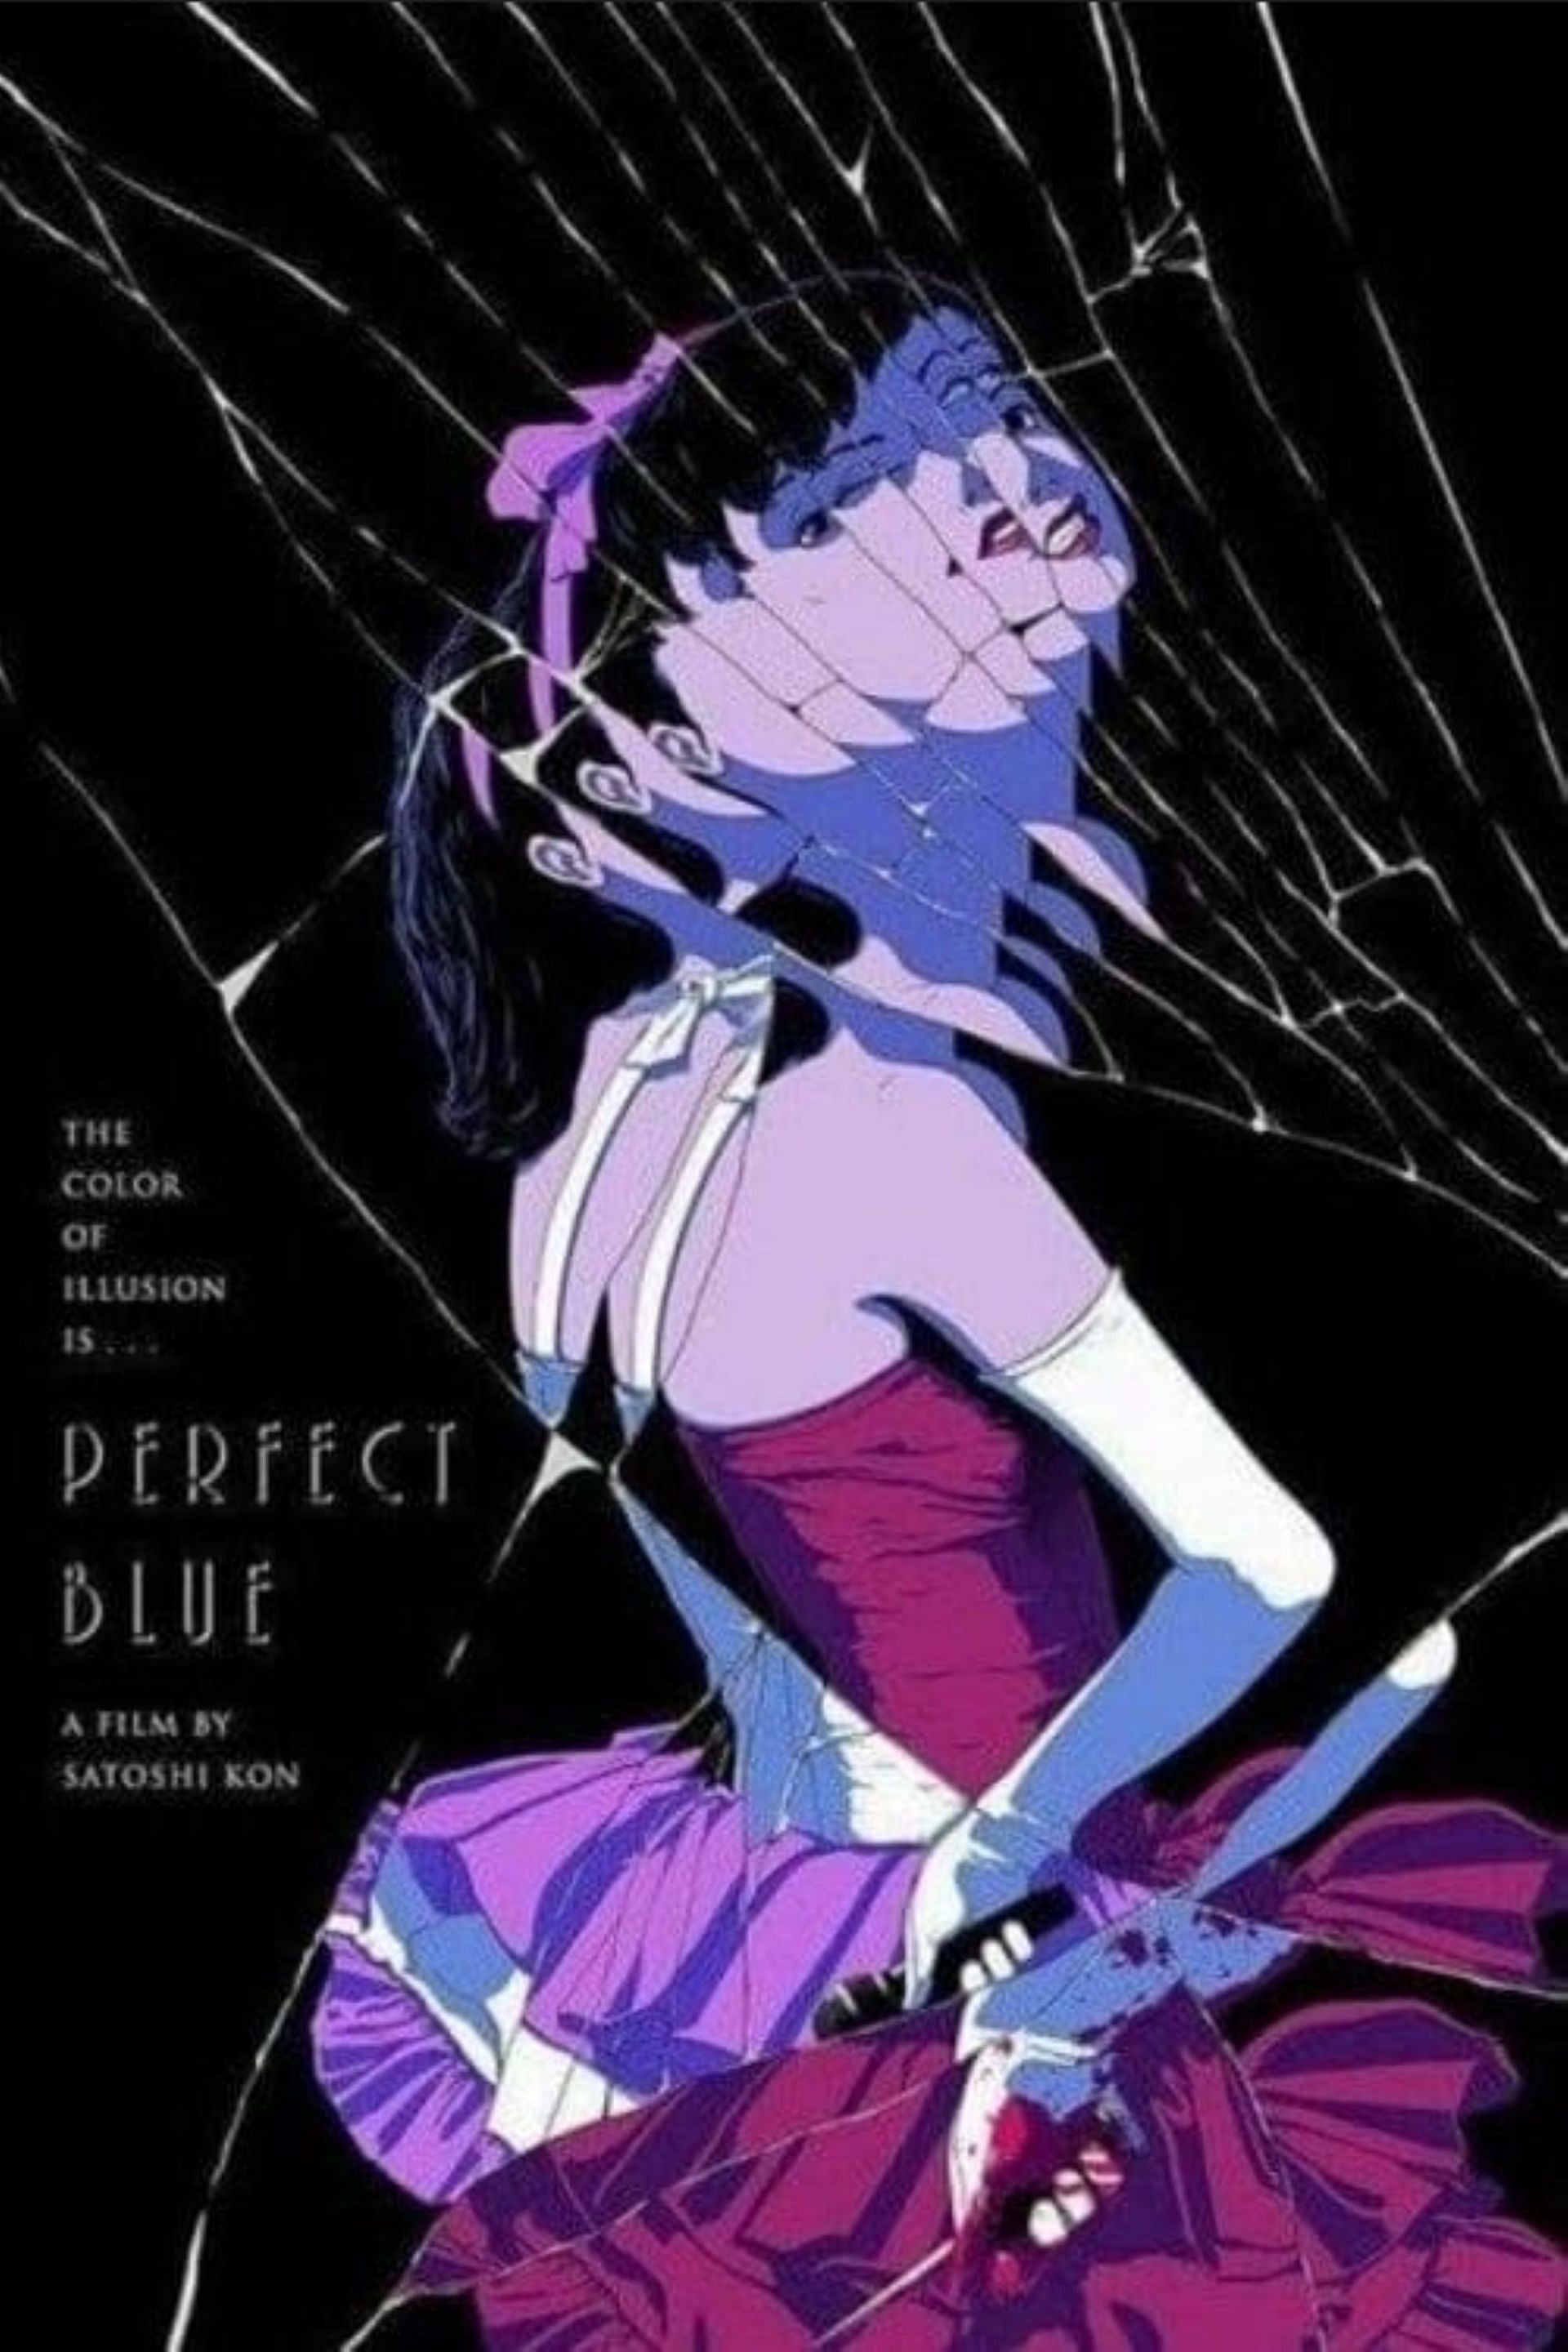 Perfect Blue film poster (Image via Studio Madhouse)